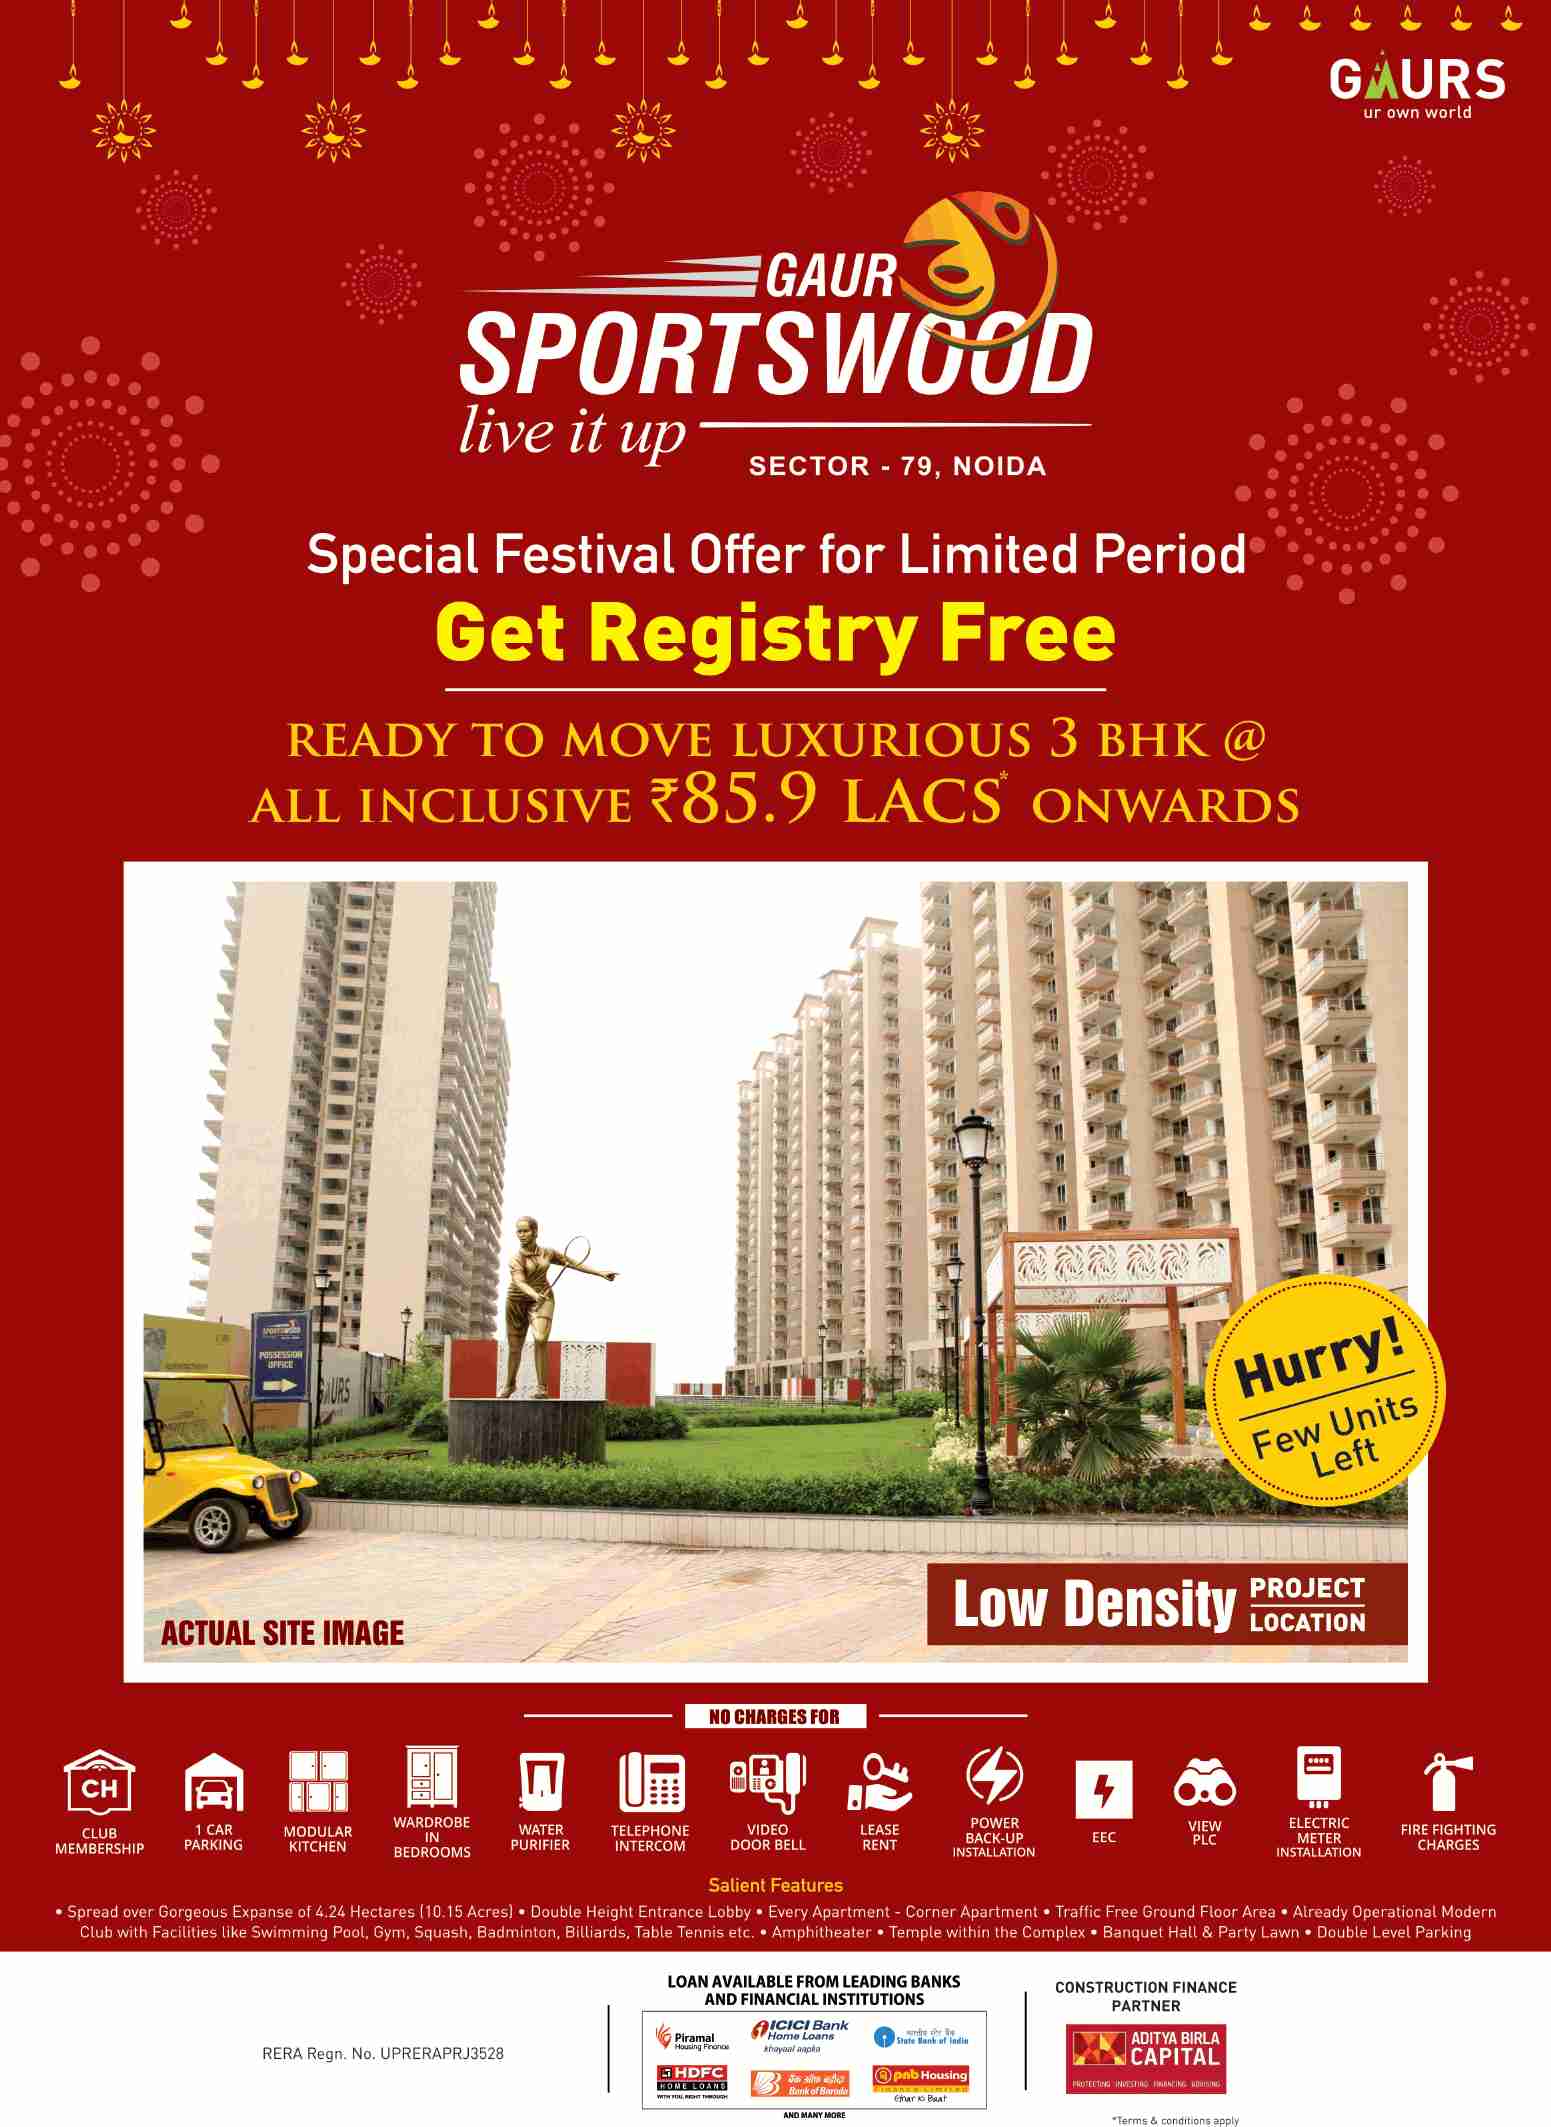 Get registry free during festival offer at Gaur Sportswood in Sector 79, Noida Update